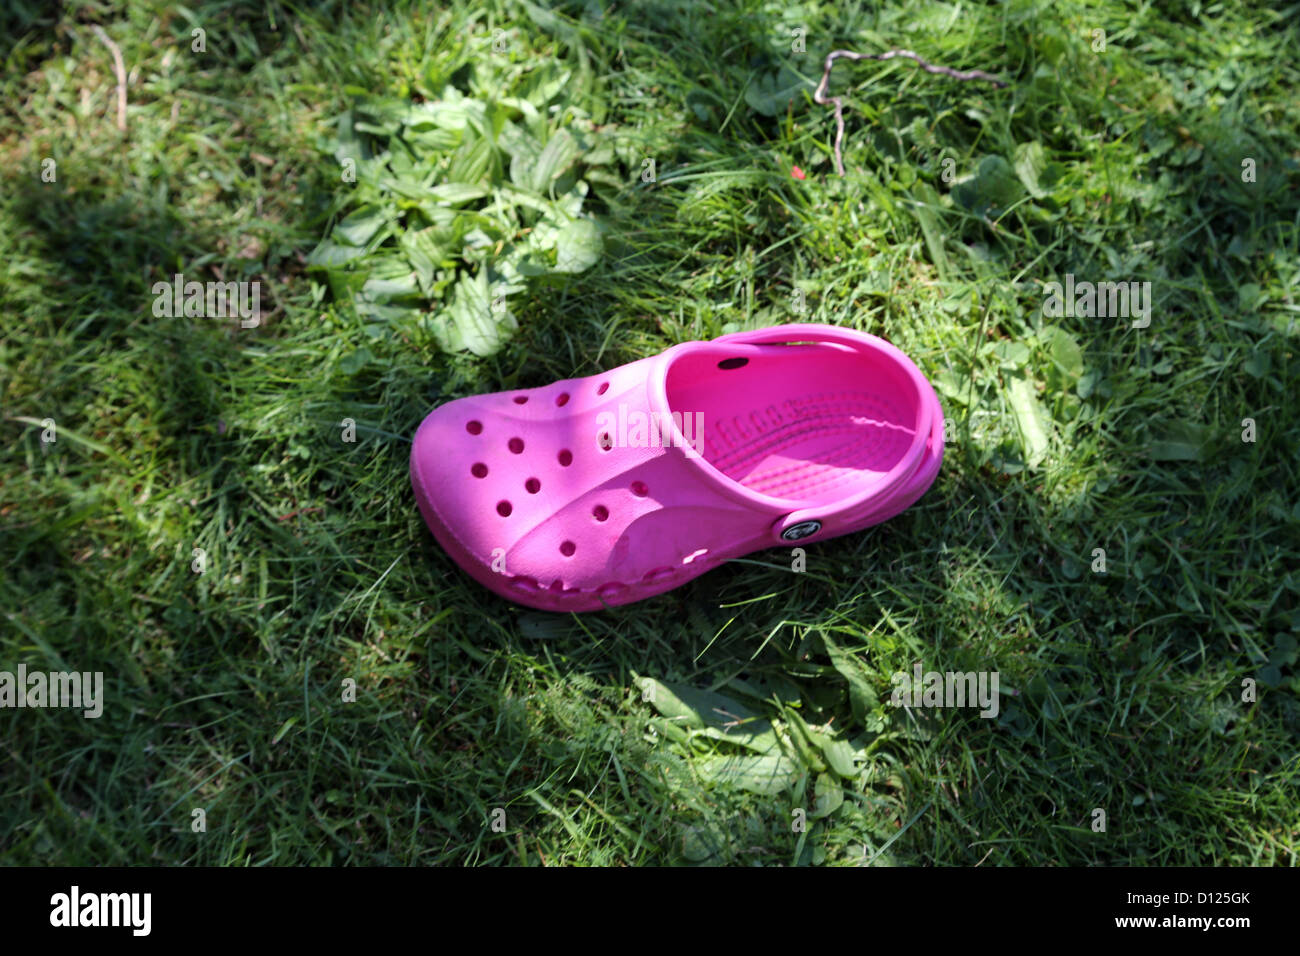 Girls Pink Patent Spanish Summer Sandals - BB